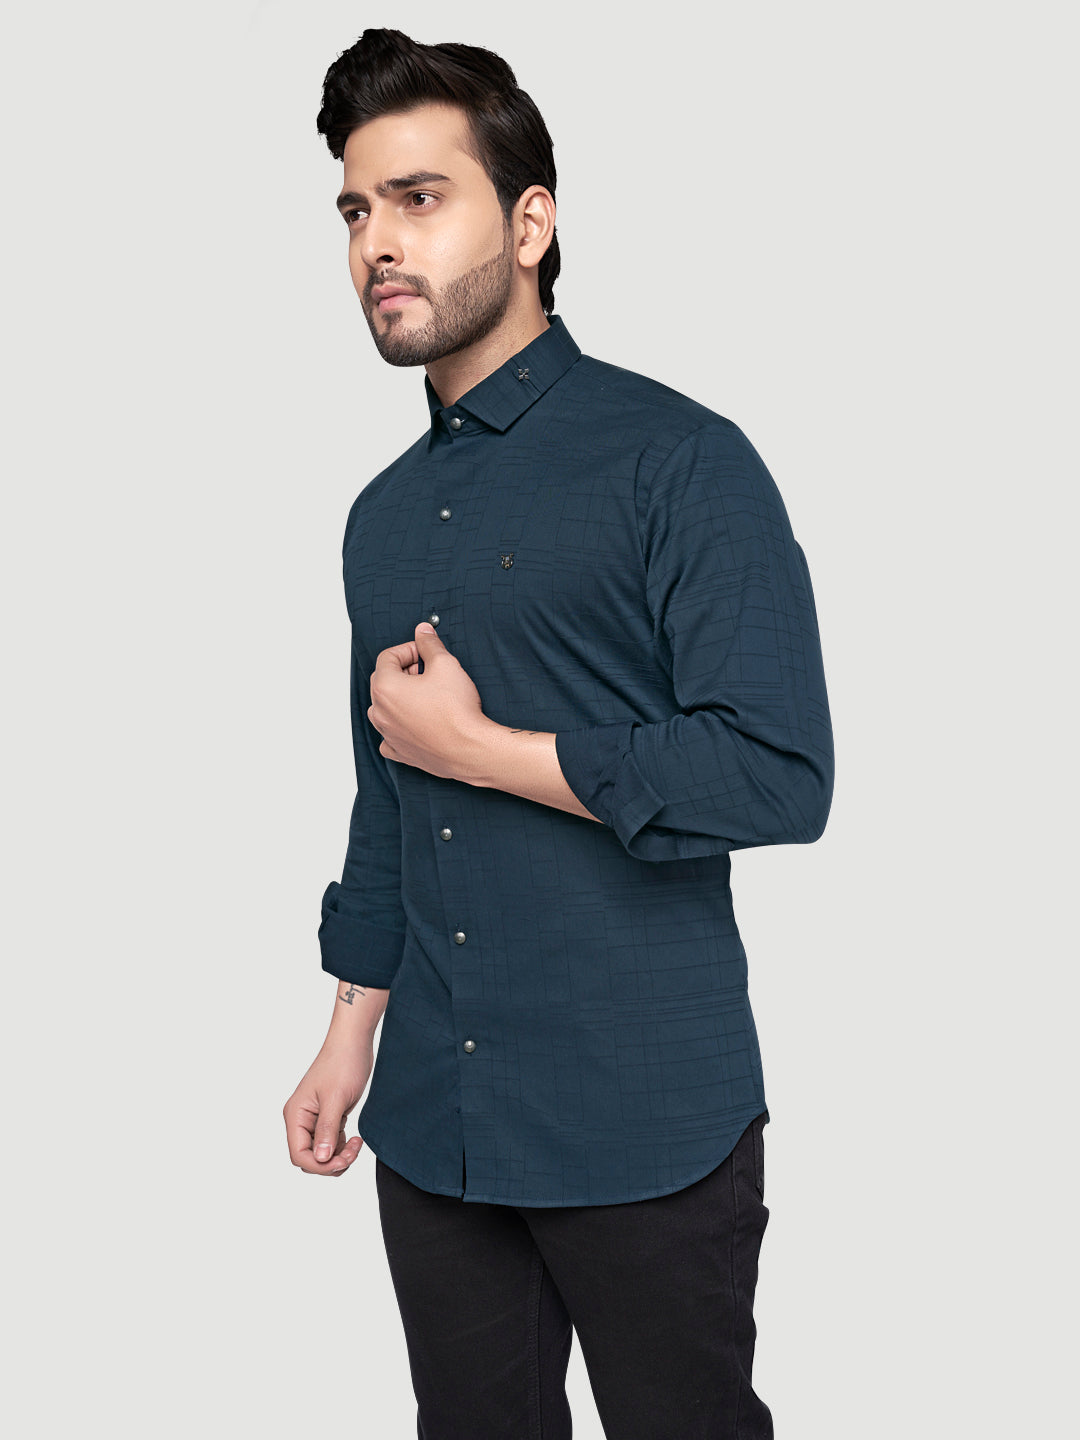 Men's Designer Shirt with Collar Accessory & Broach